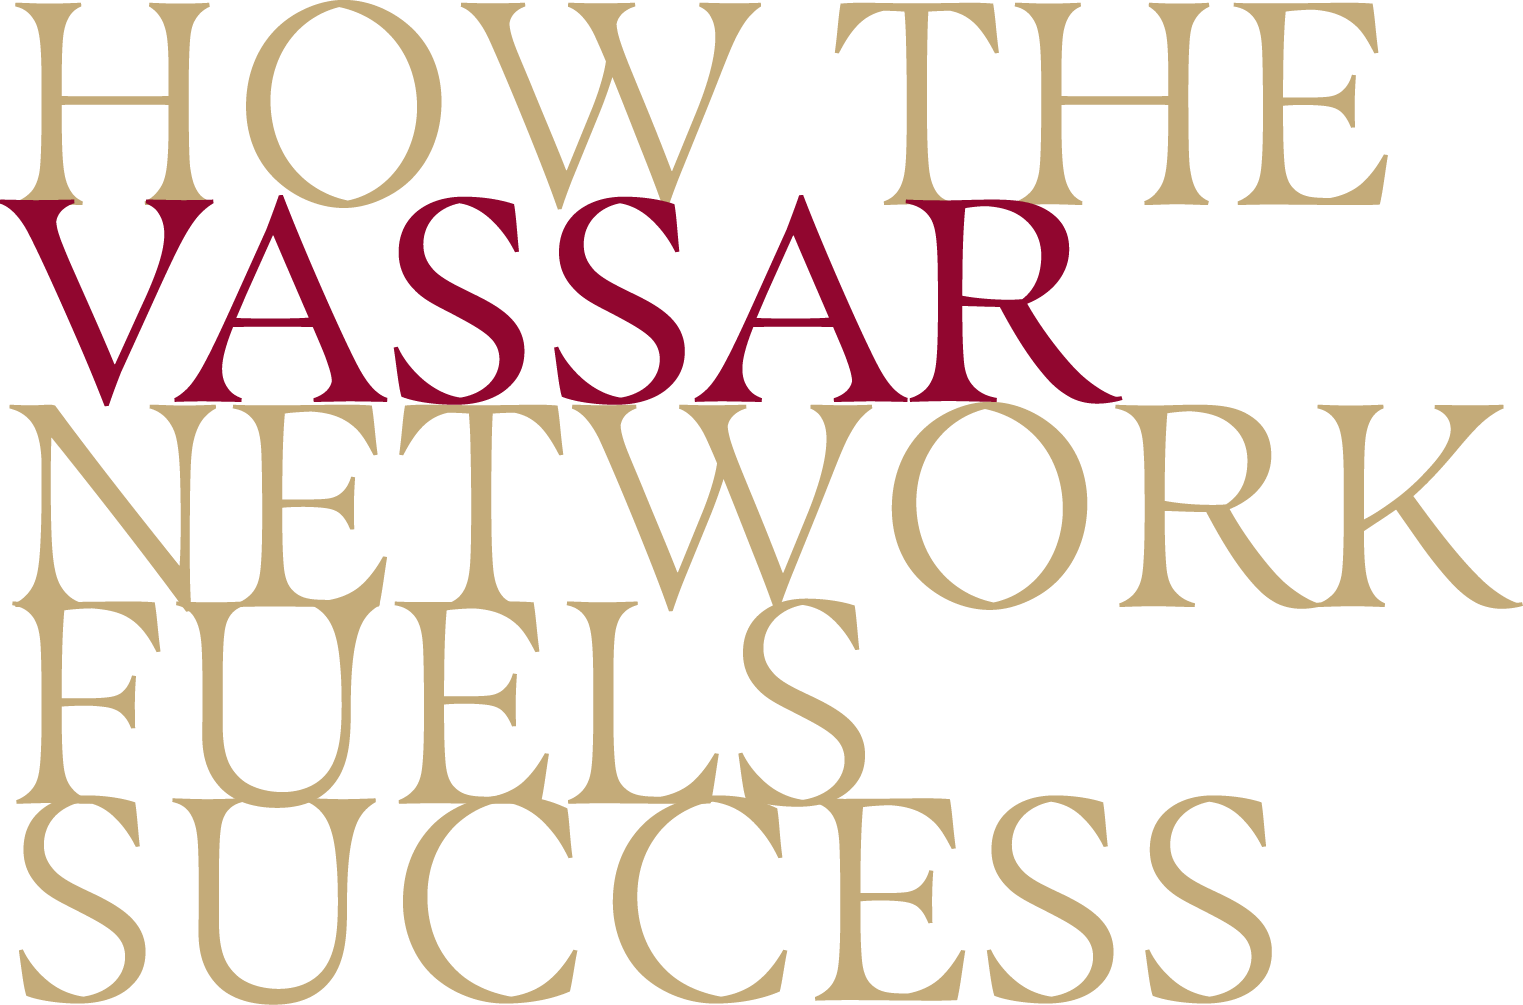 How Vassar Network Fuels Success typography